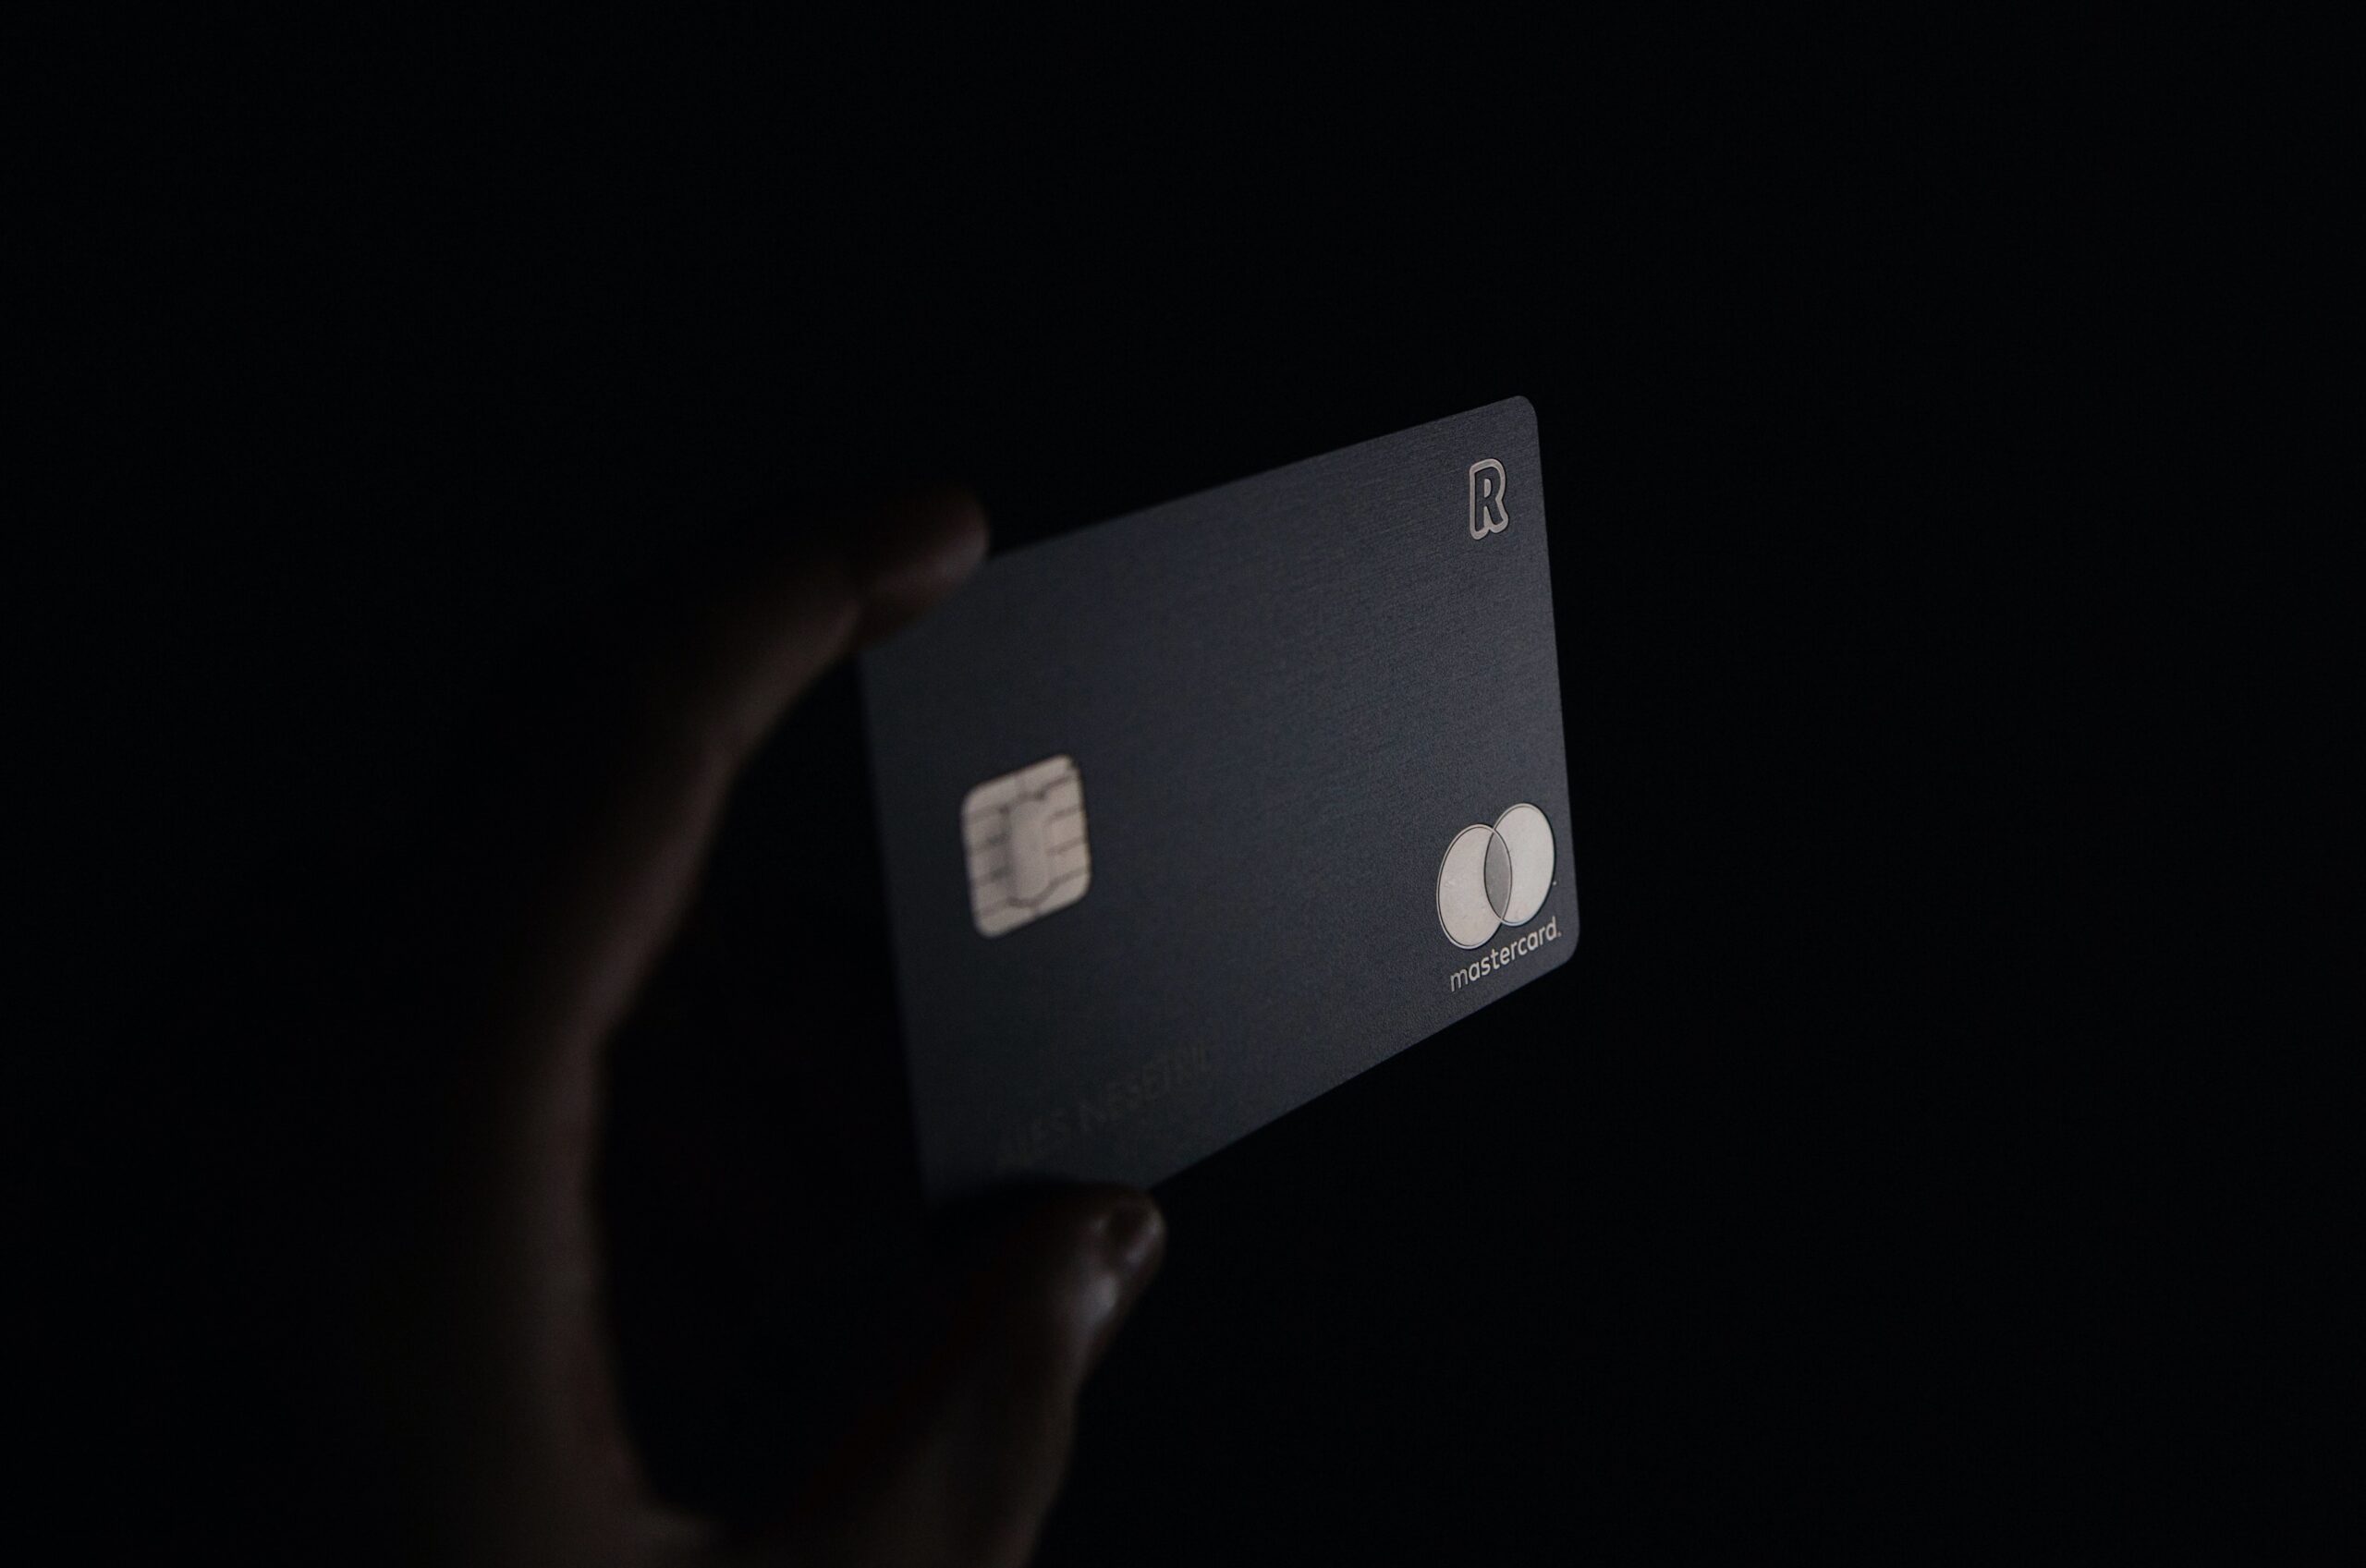 credit card in black background